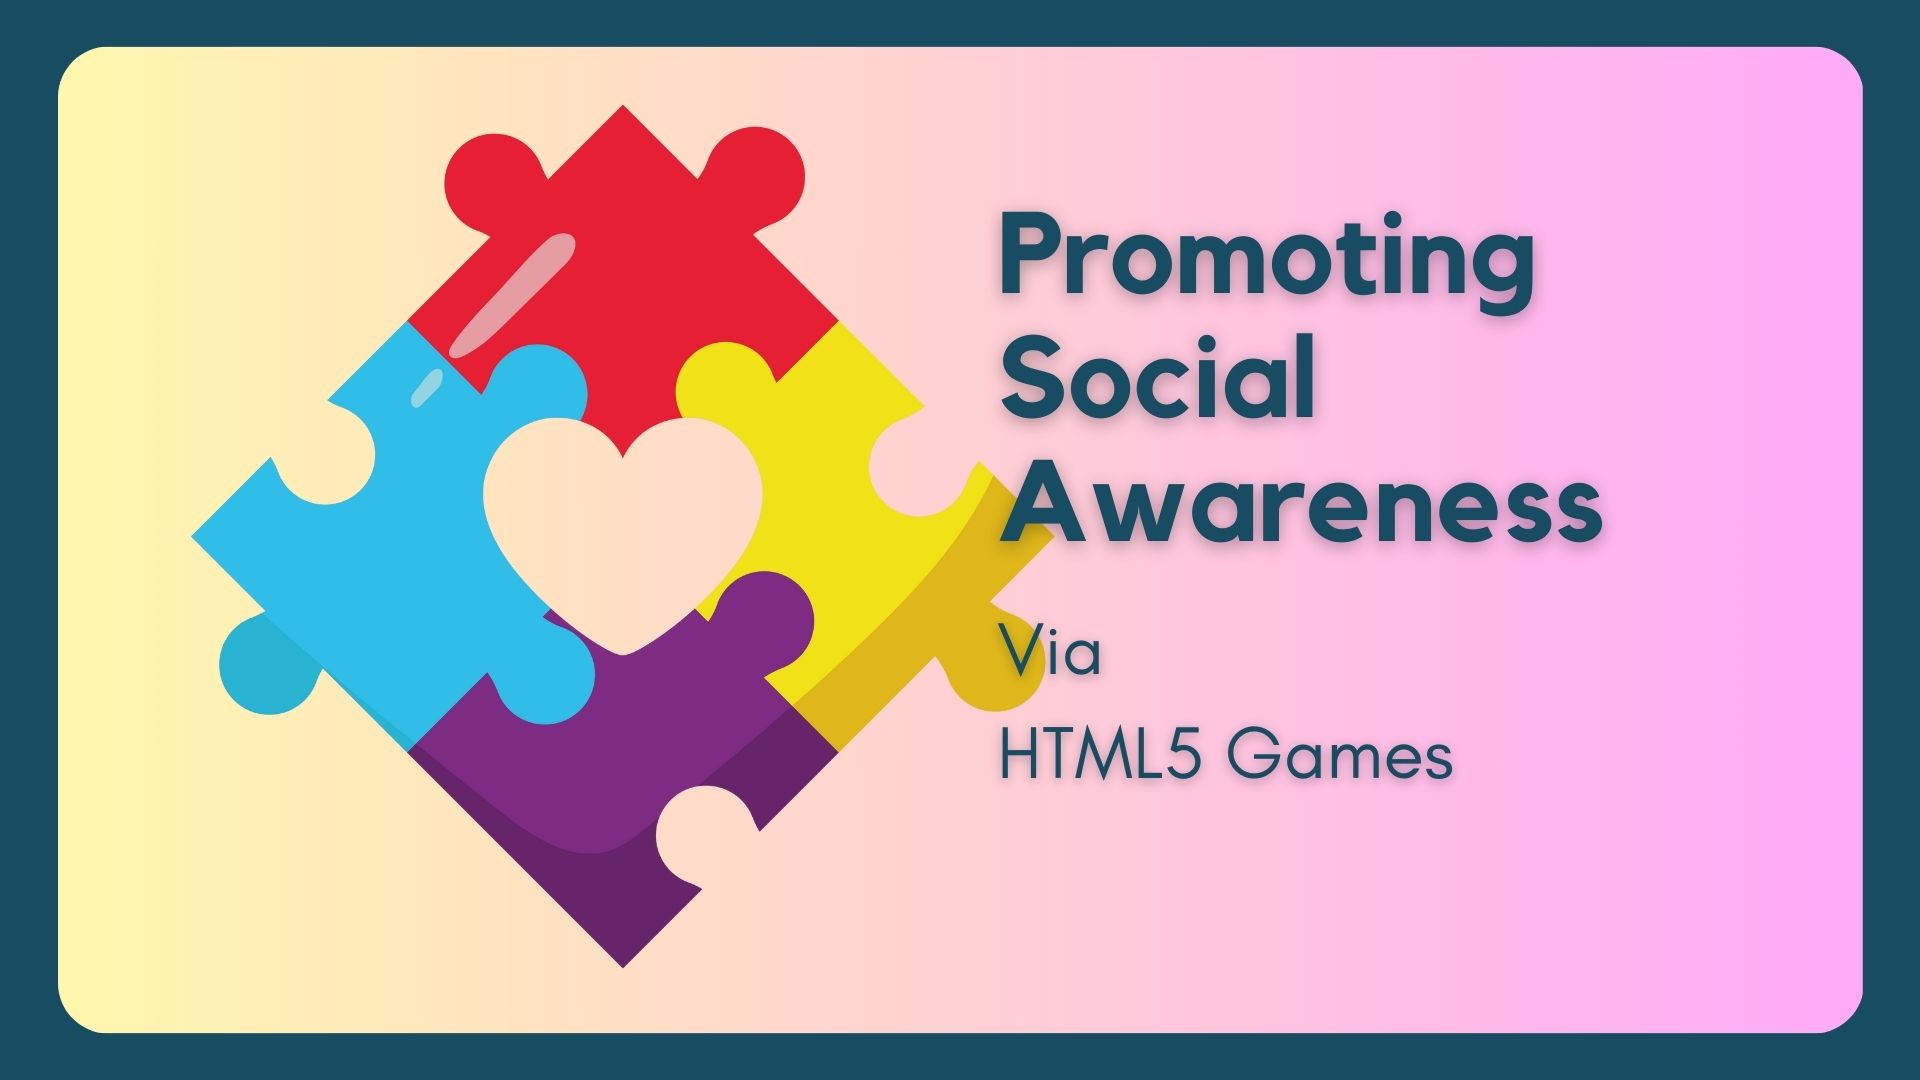 Promoting Social Awareness Via HTML5 Games